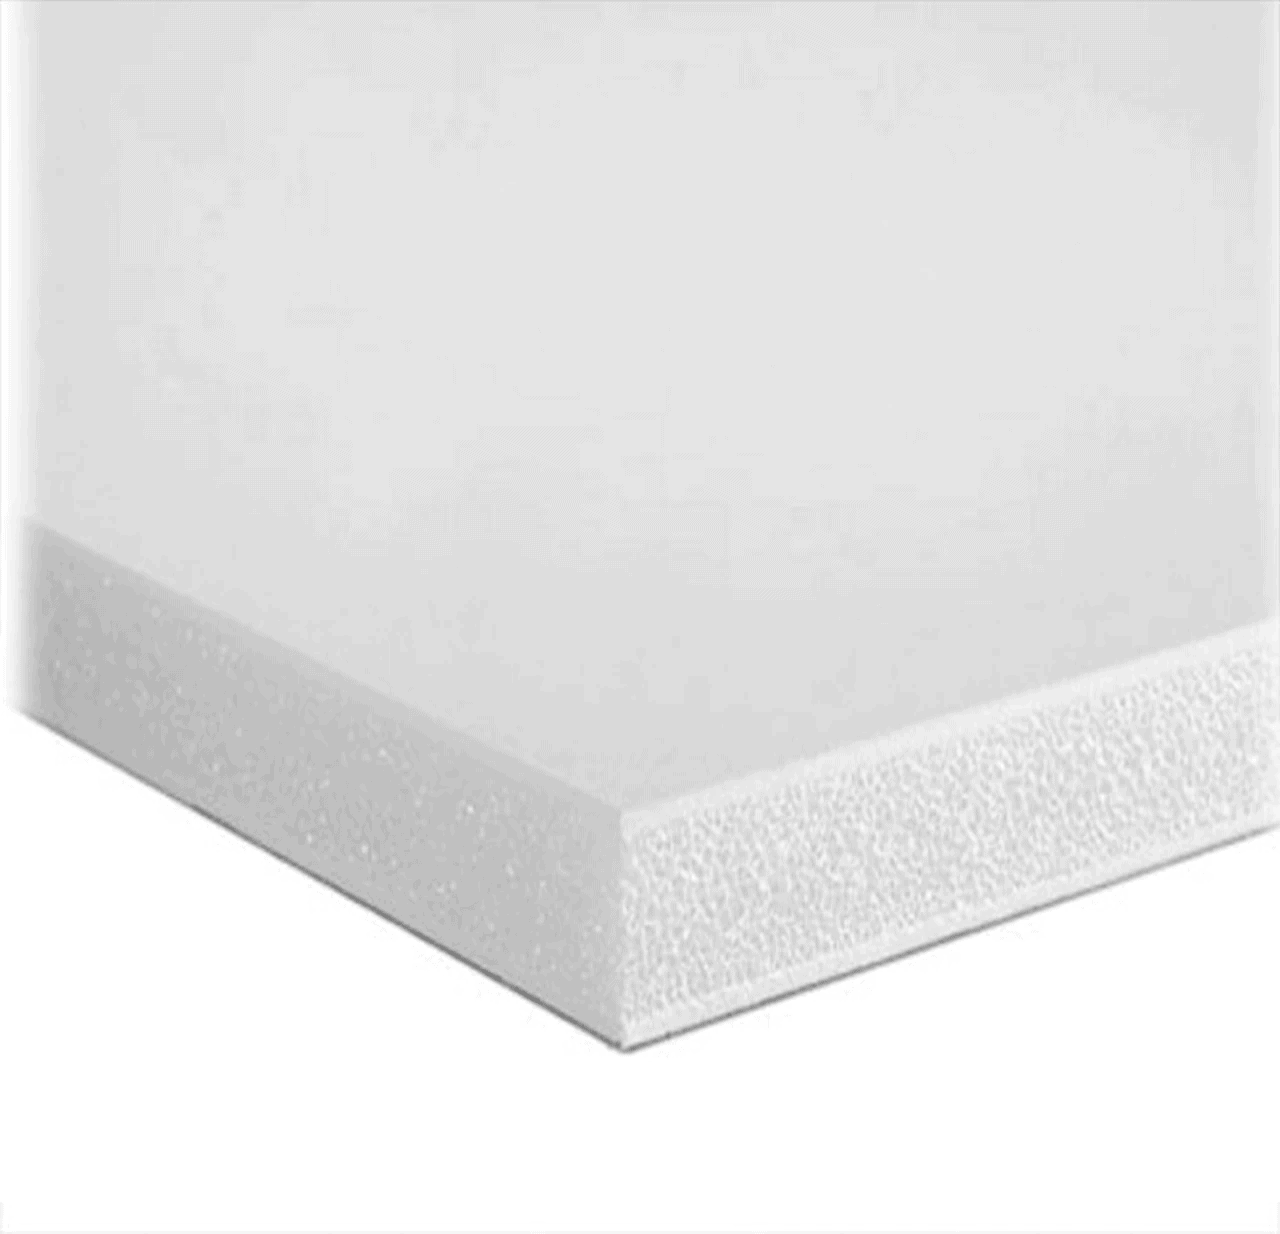 3mm Foamalite Premium White Foam PVC